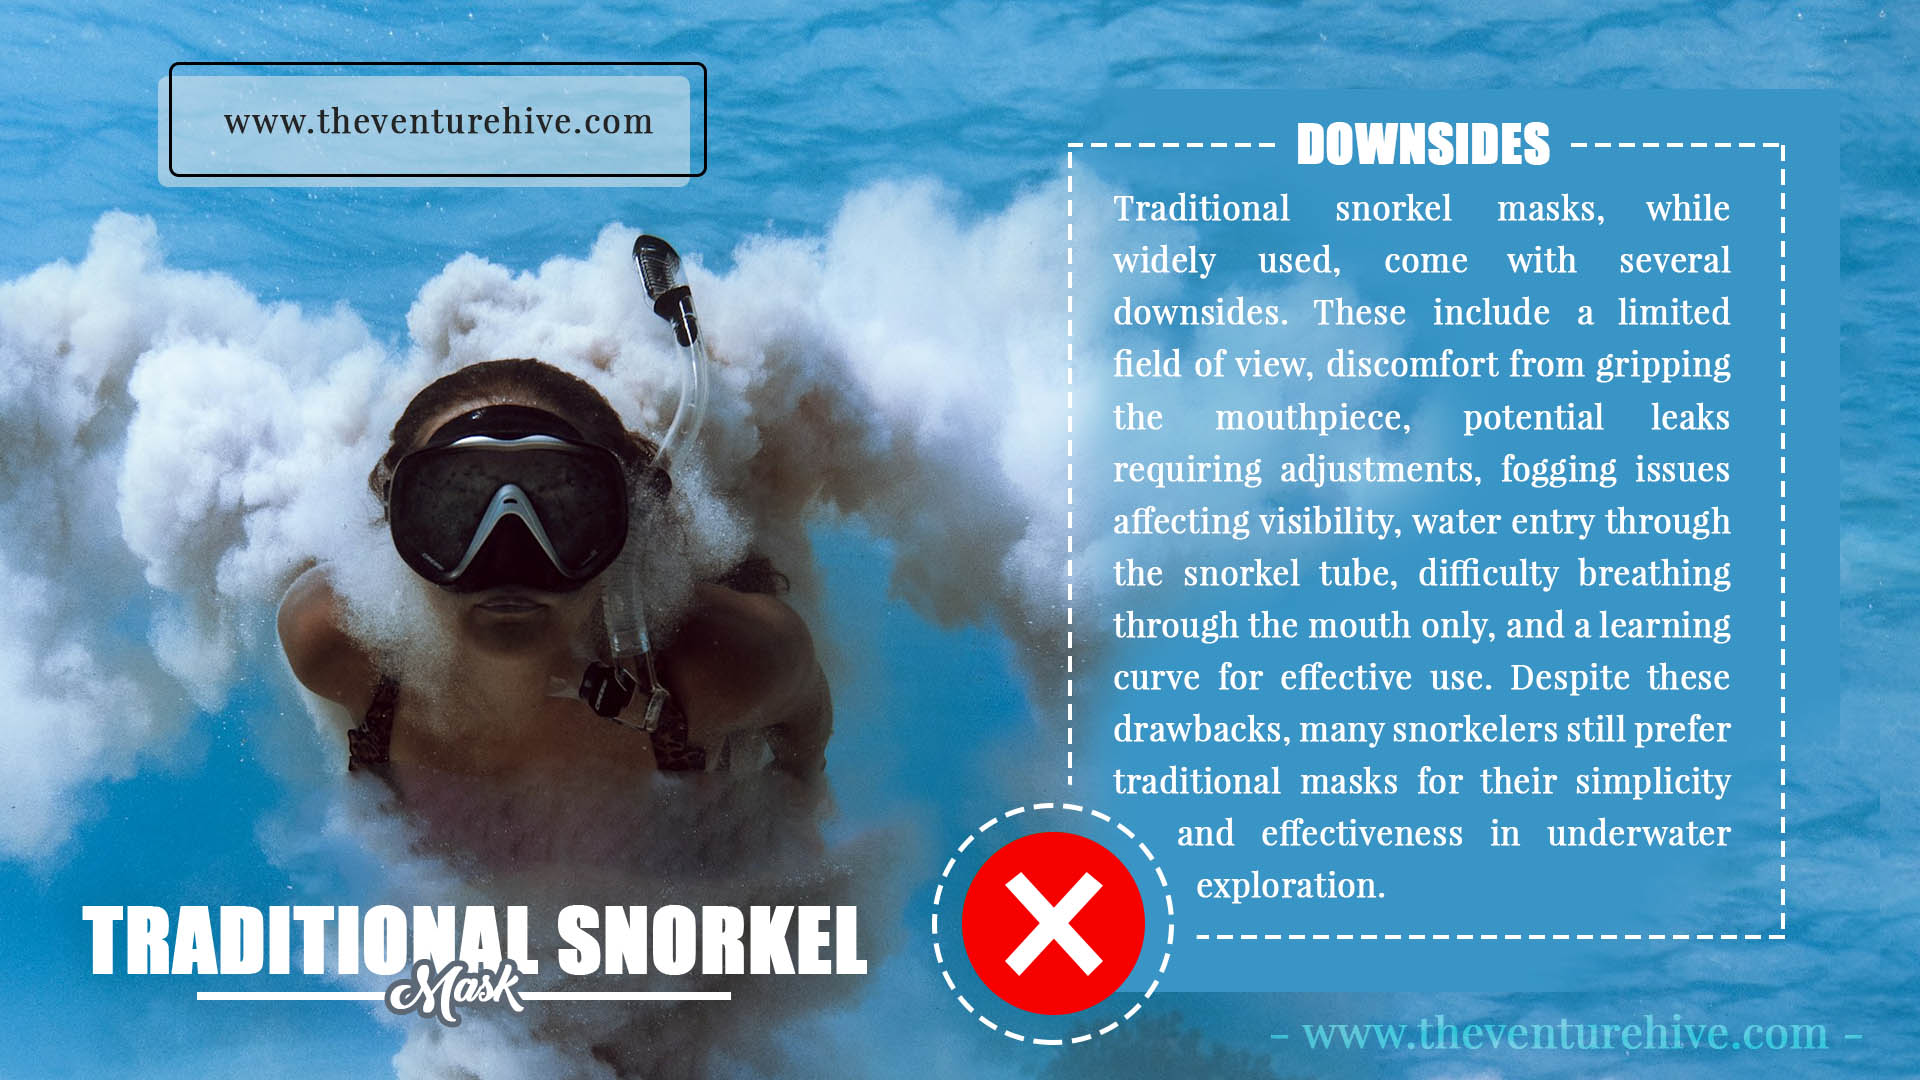 Traditional snorkel mask downsides